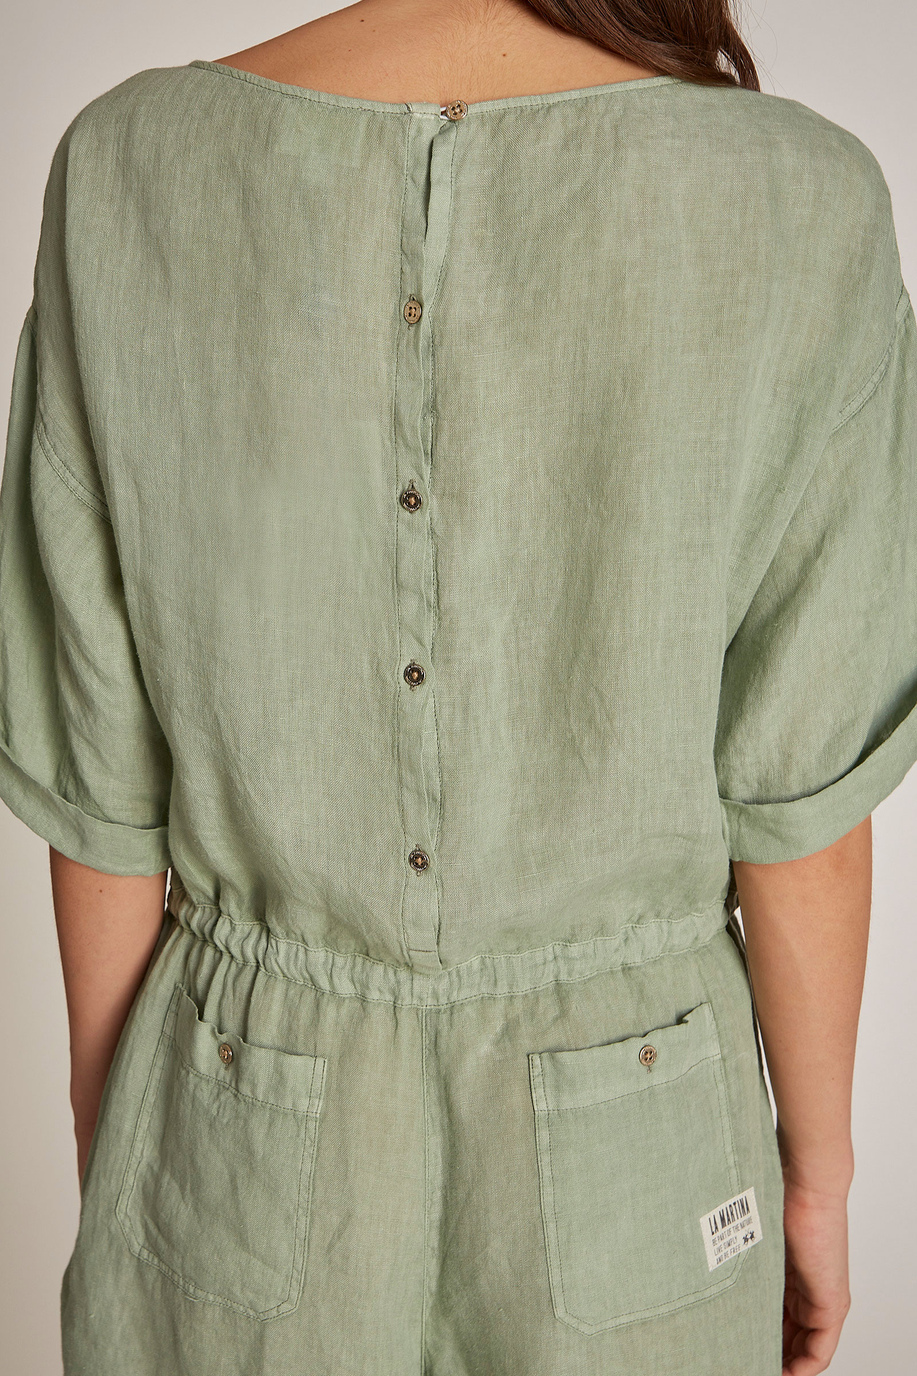 Women's short-sleeved regular-fit linen playsuit